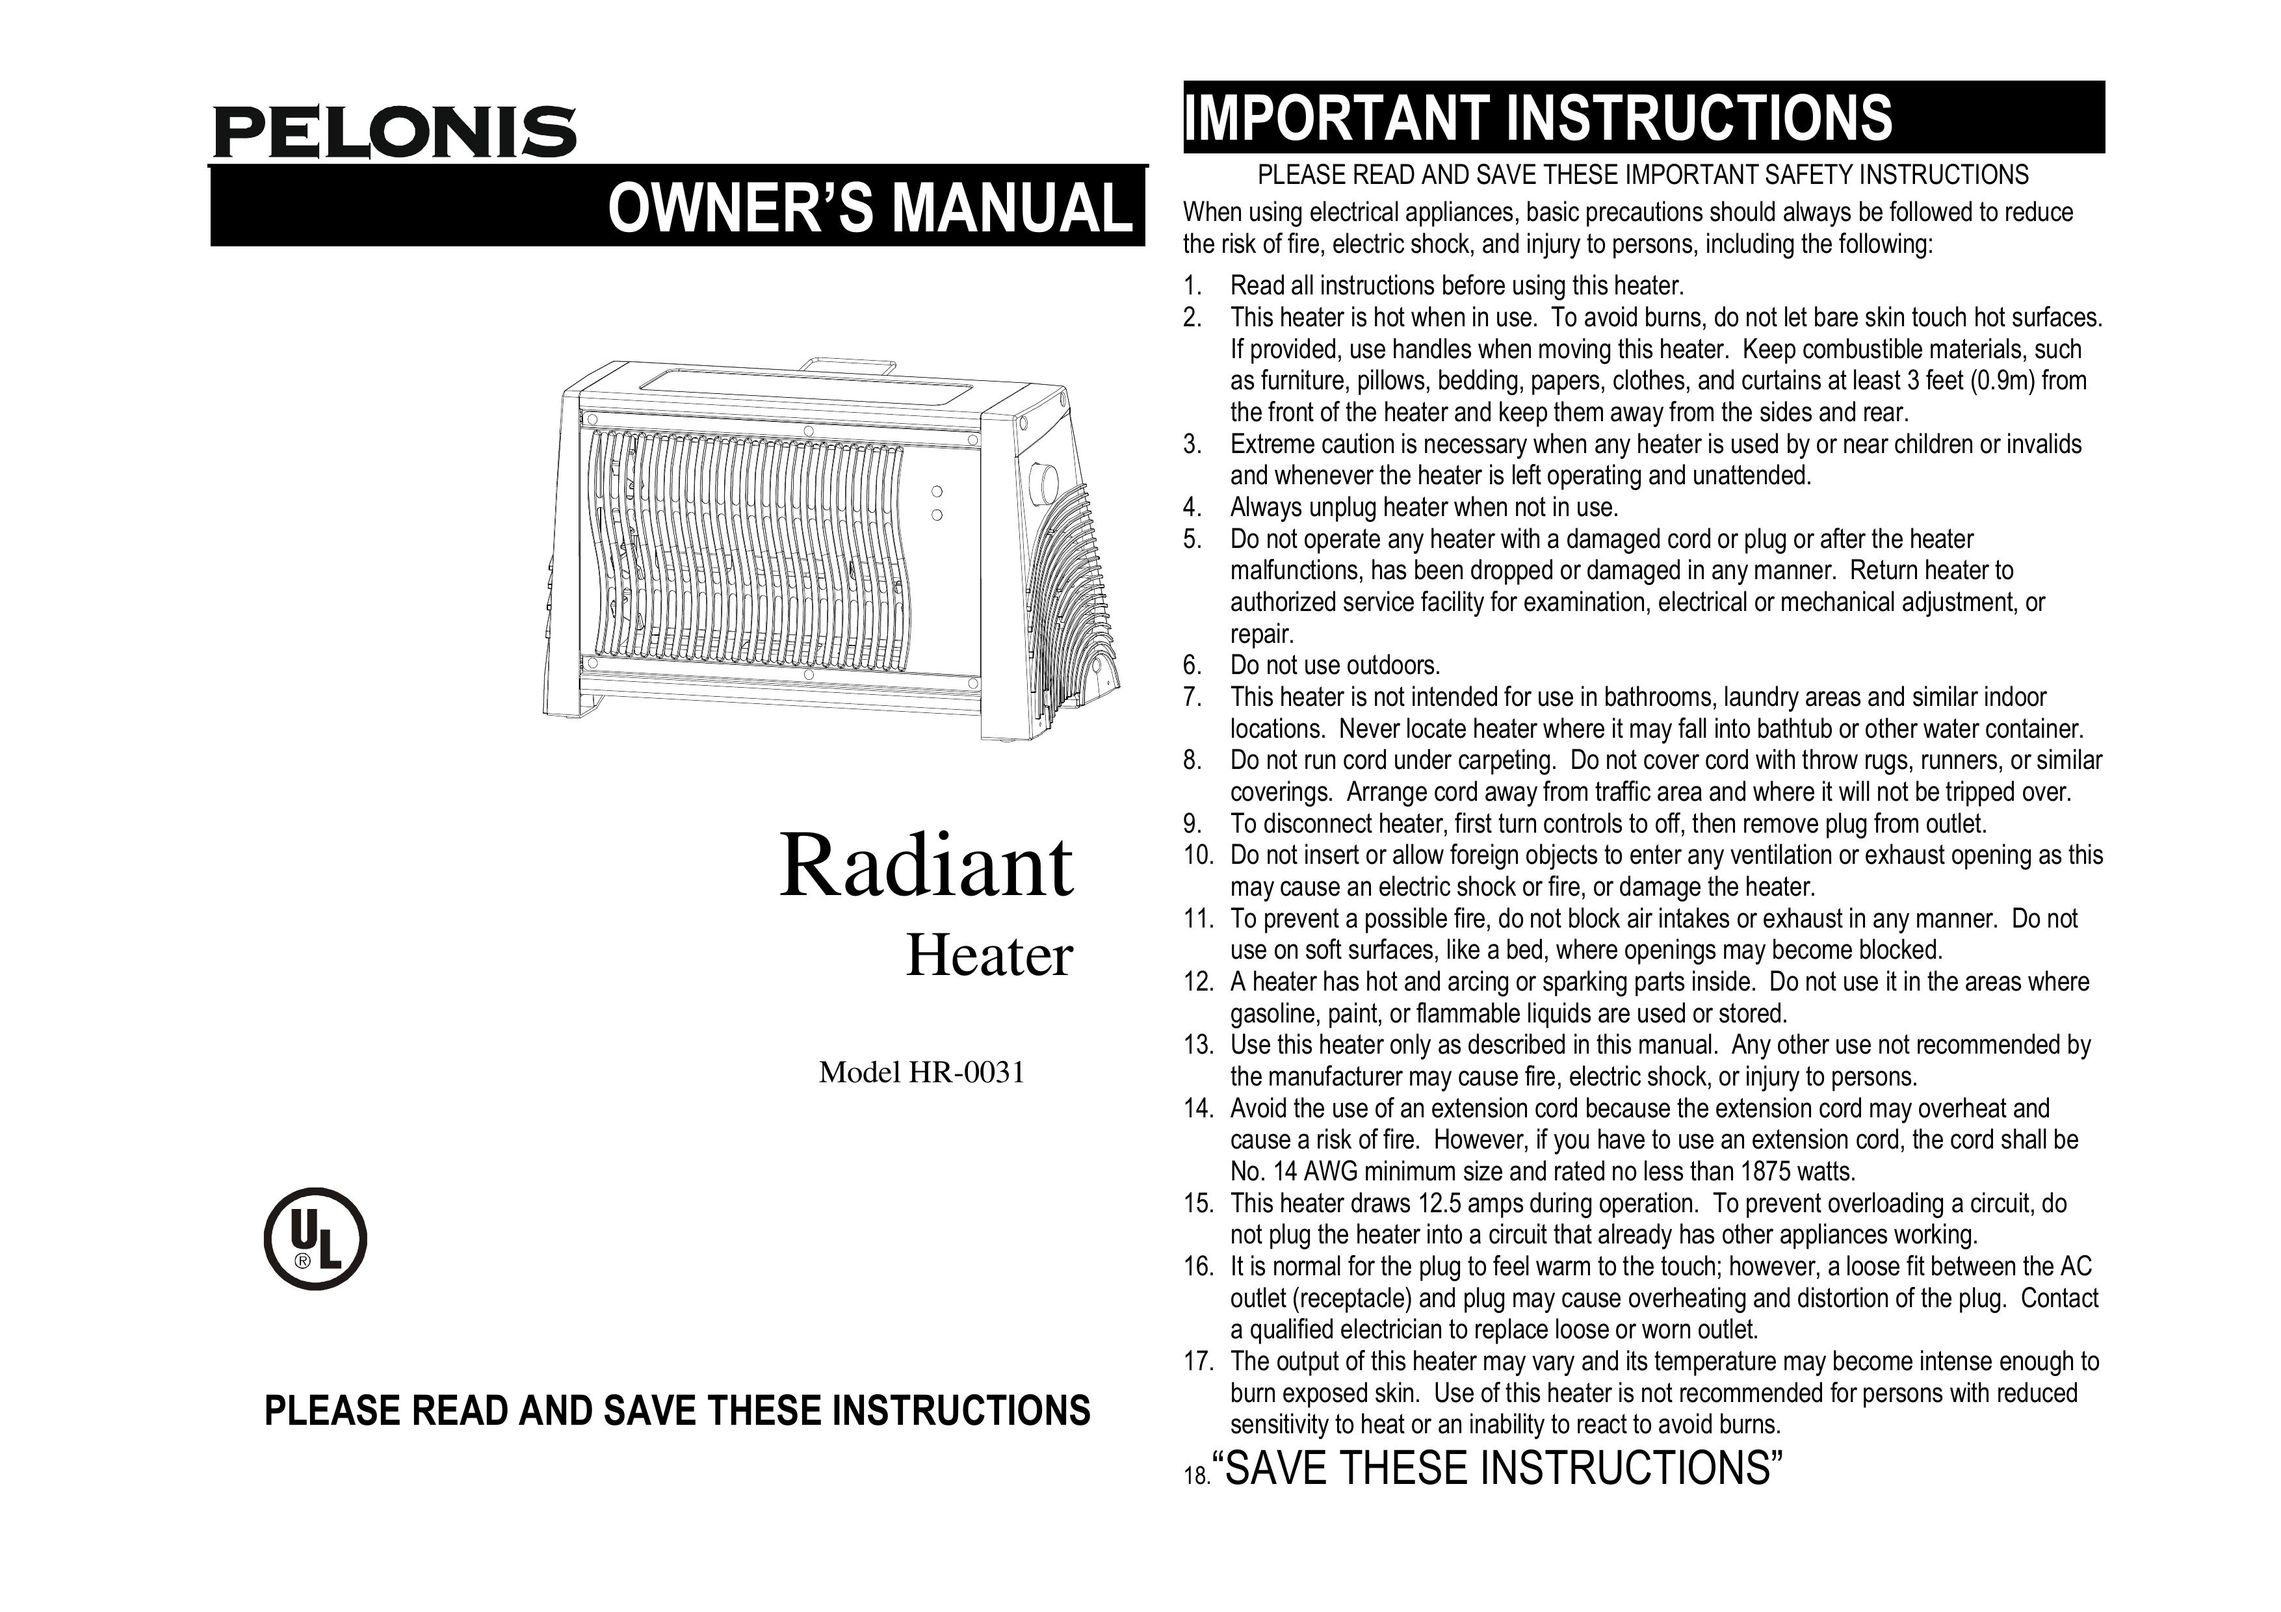 Pelonis HR-0031 Electric Heater User Manual